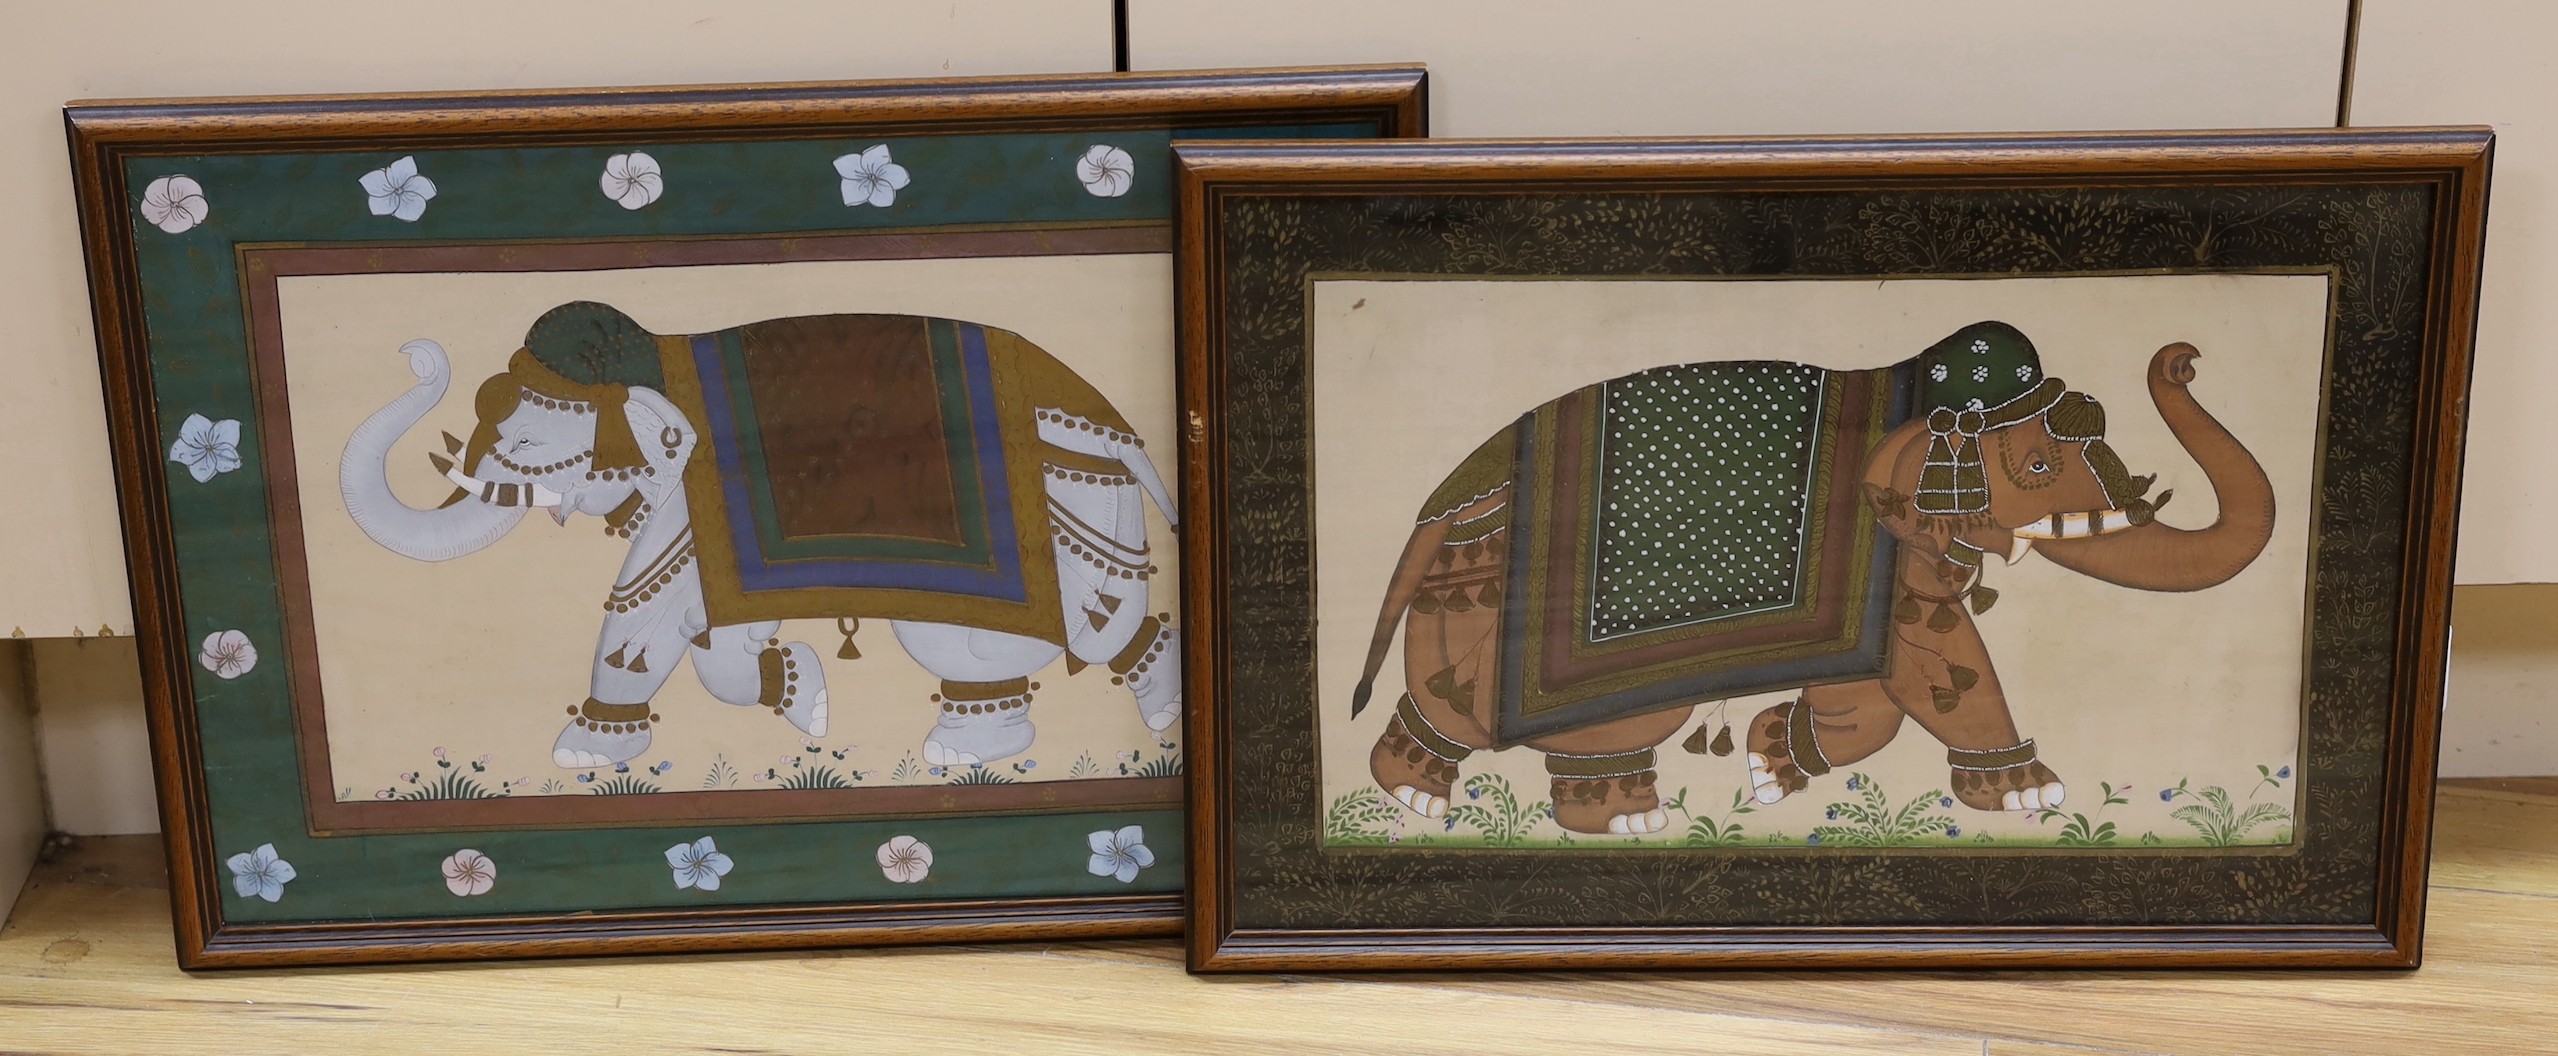 Indian School, two batik paintings, Studies of elephants, largest 35 x 49cm